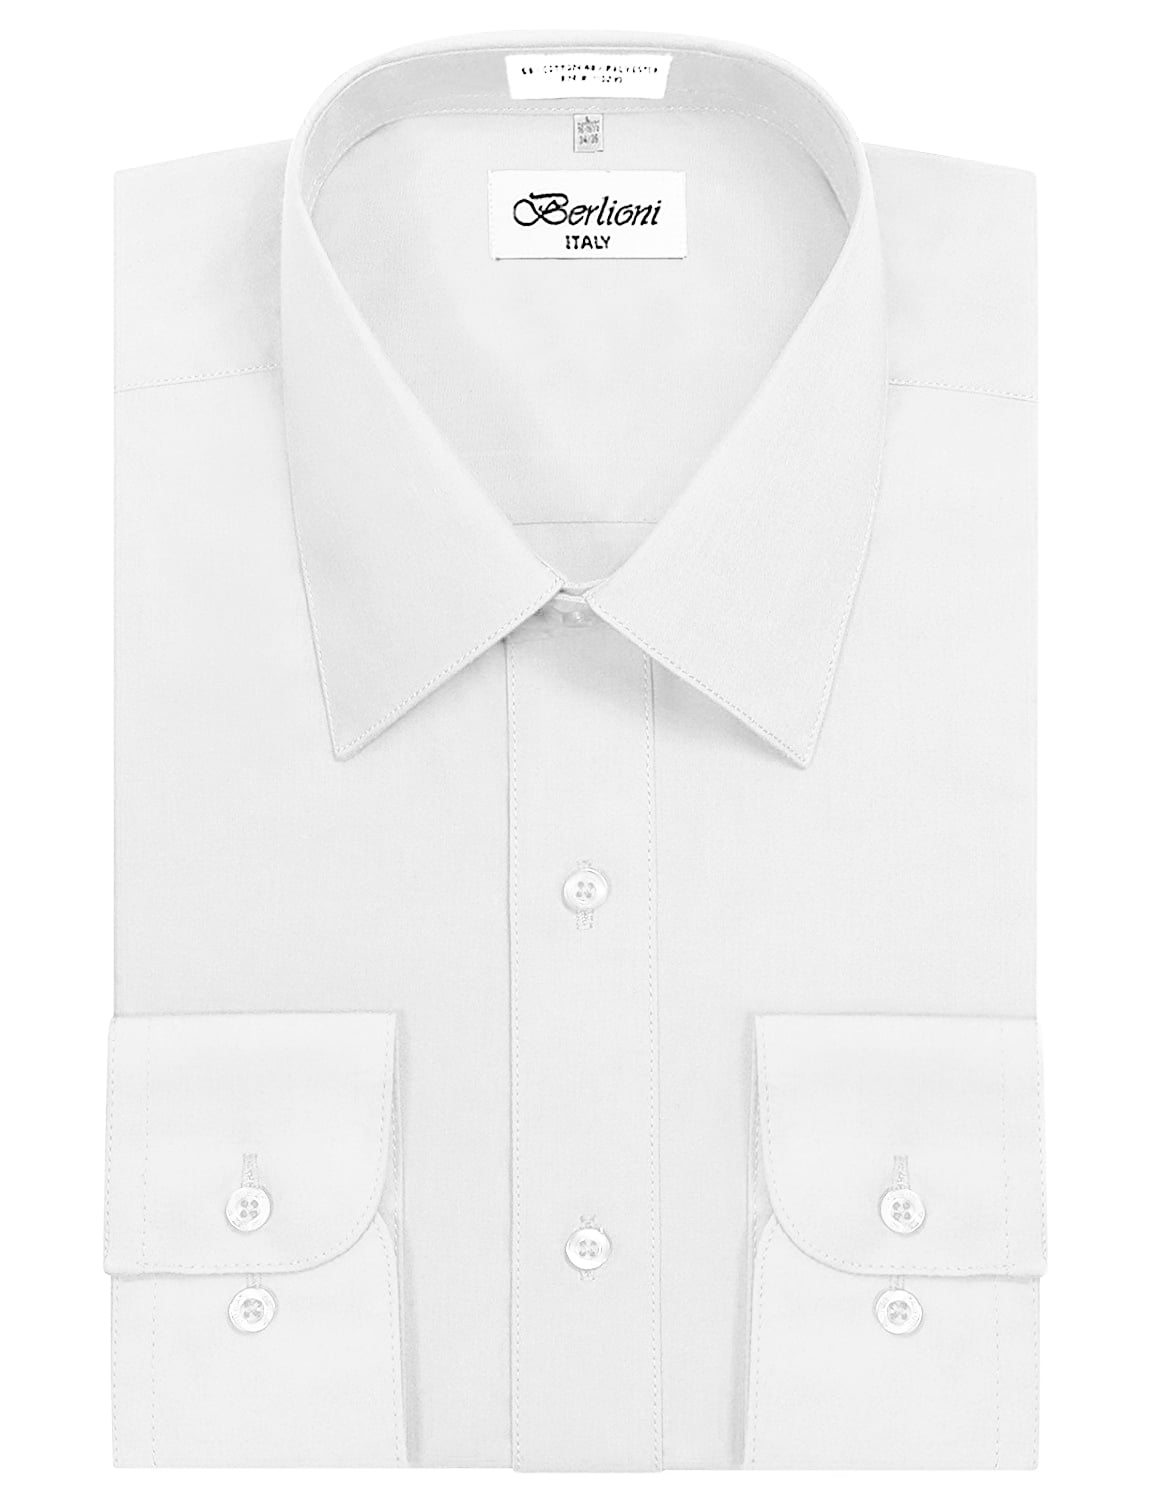 Berlioni Italy Men's Long Sleeve Solid Premium Dress Shirt 